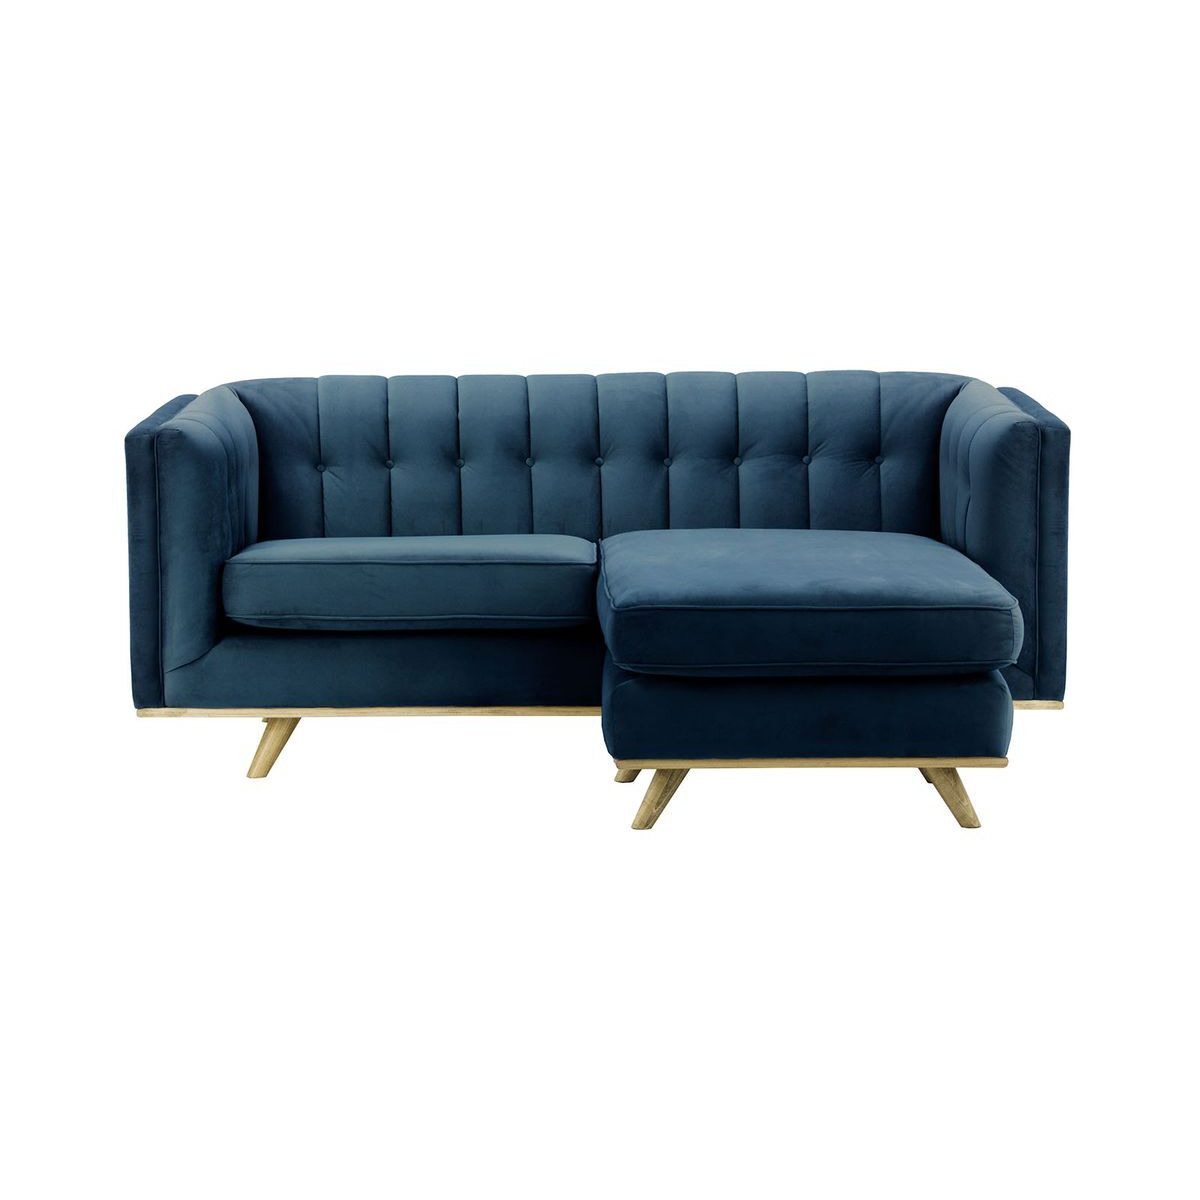 Vicenza Universal Corner Sofa, blue, Leg colour: wax black - image 1